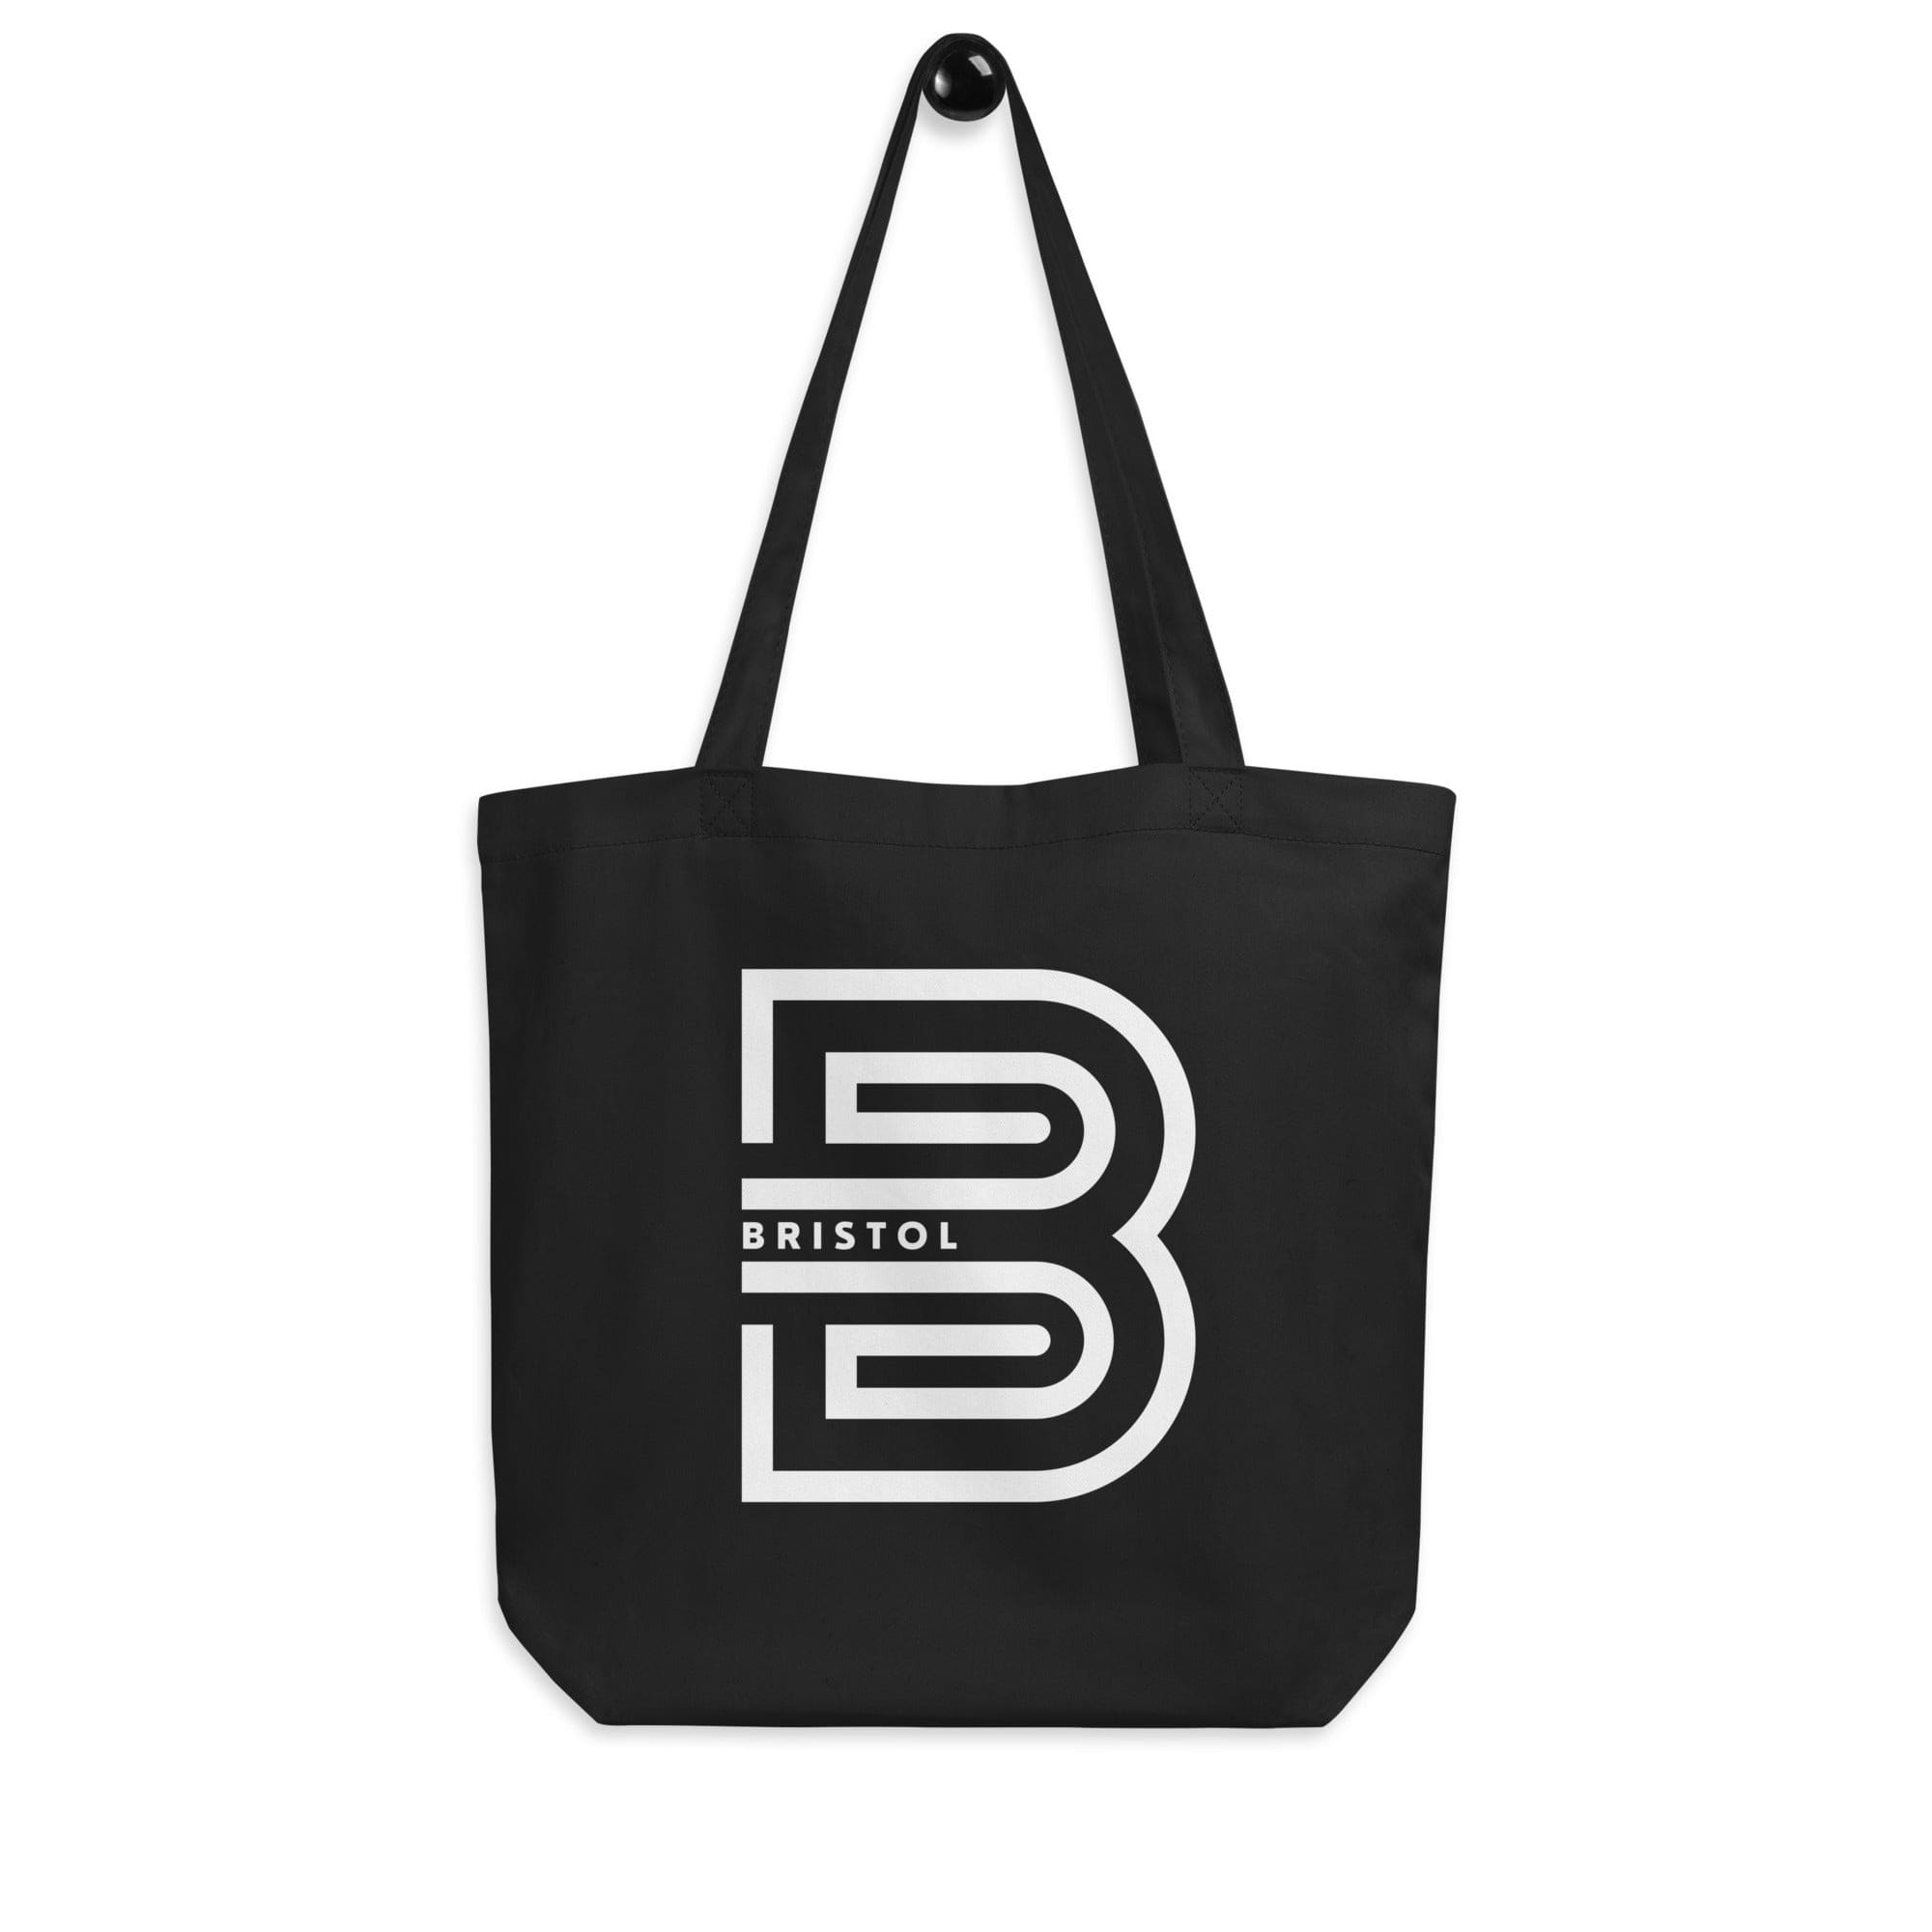 Bristol B Tote Bag | Organic Cotton Jolly & Goode